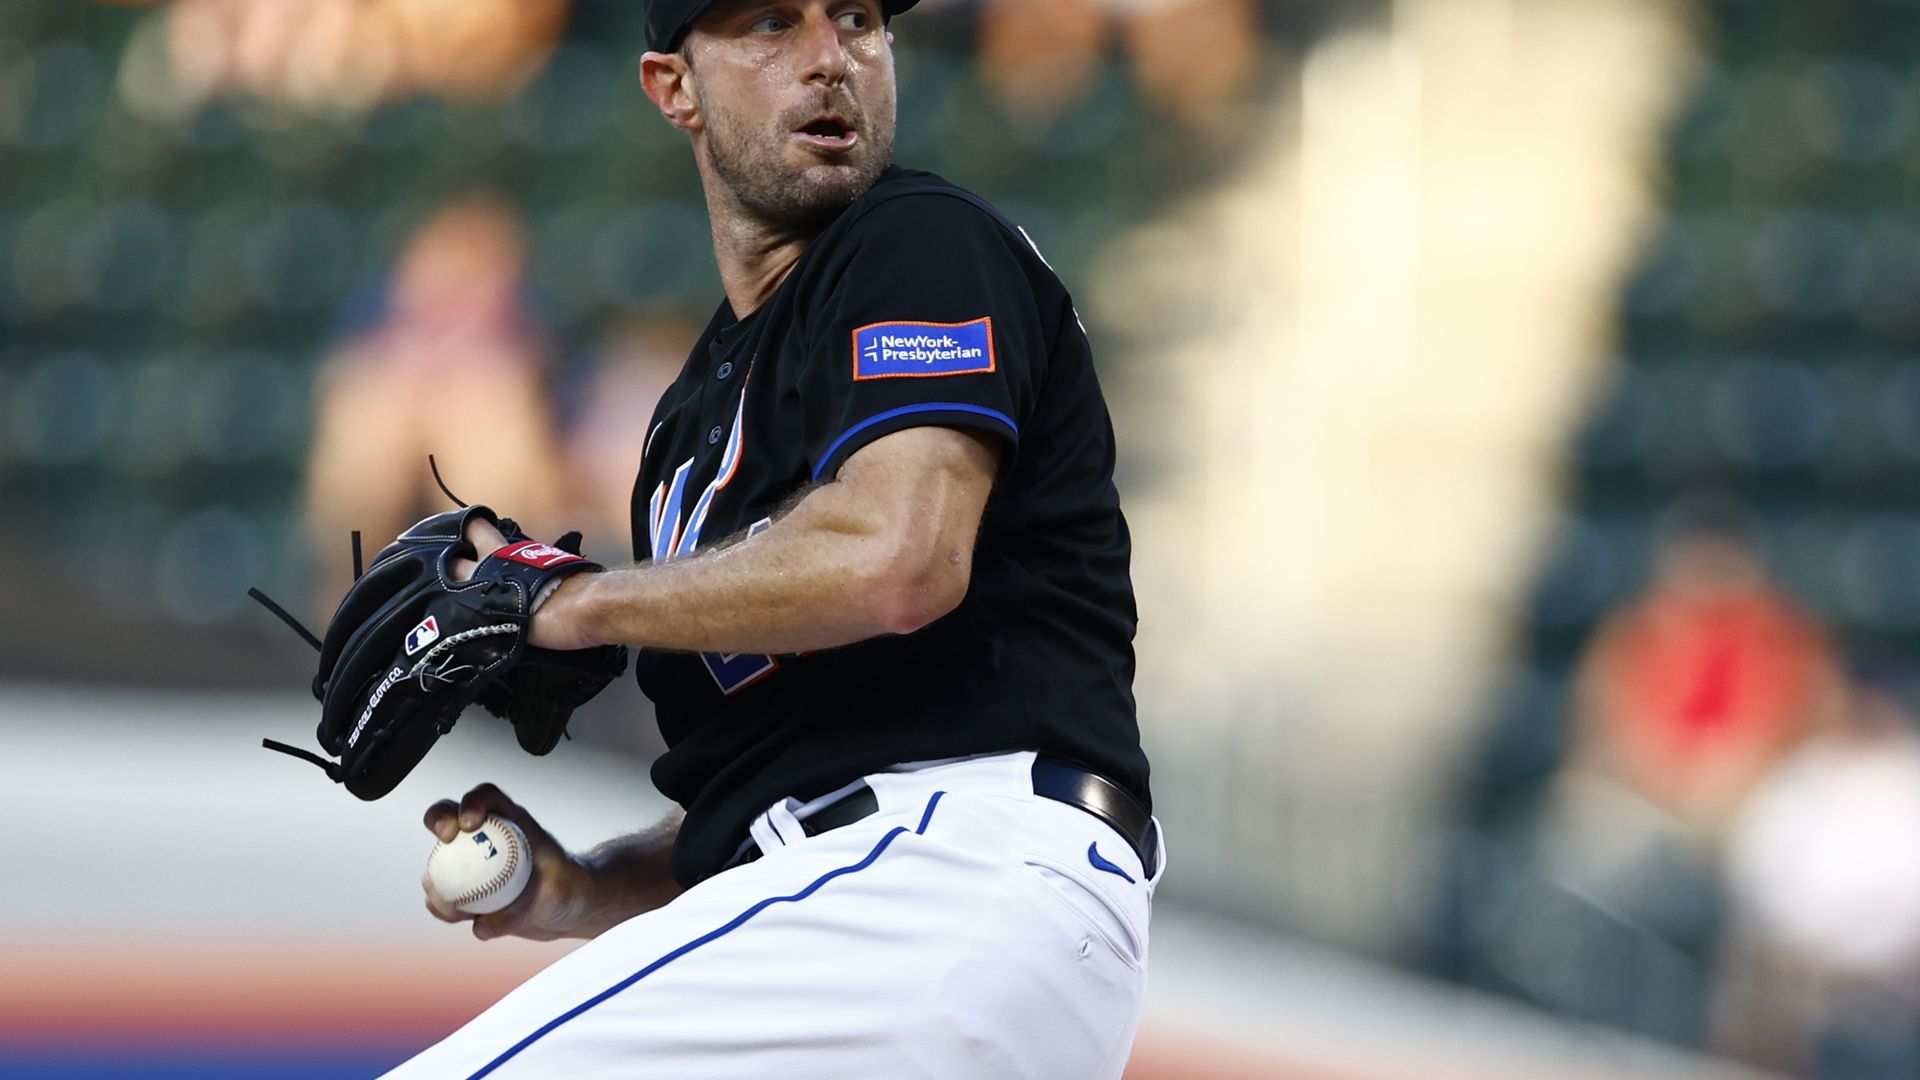 2023 MLB trade deadline: The Rangers need Max Scherzer, Jordan